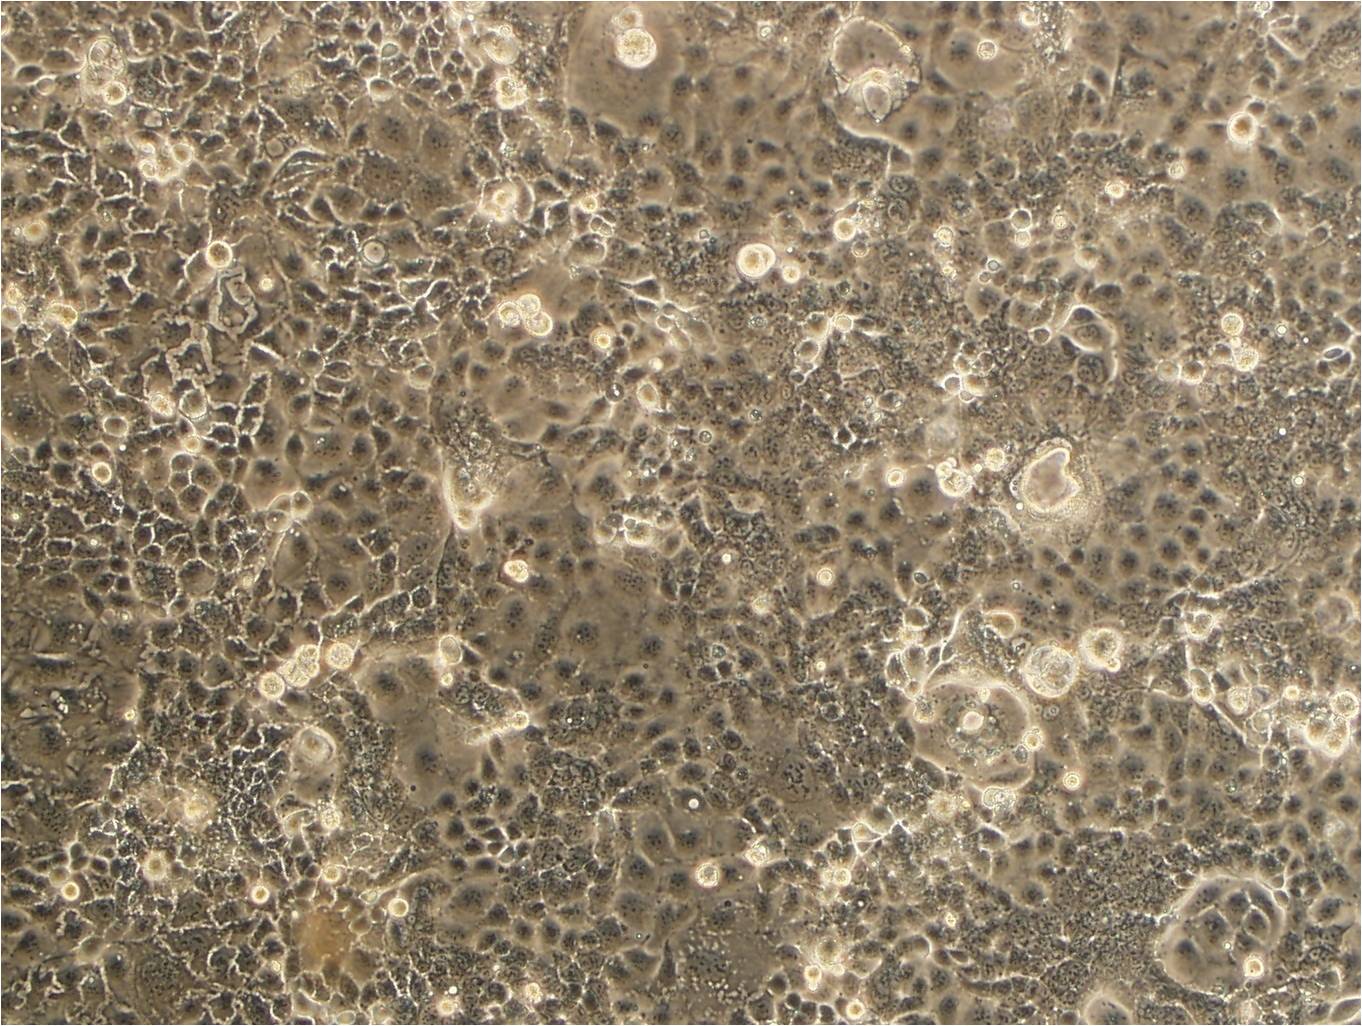 IMR-32 Cell:人神经母细胞瘤细胞系